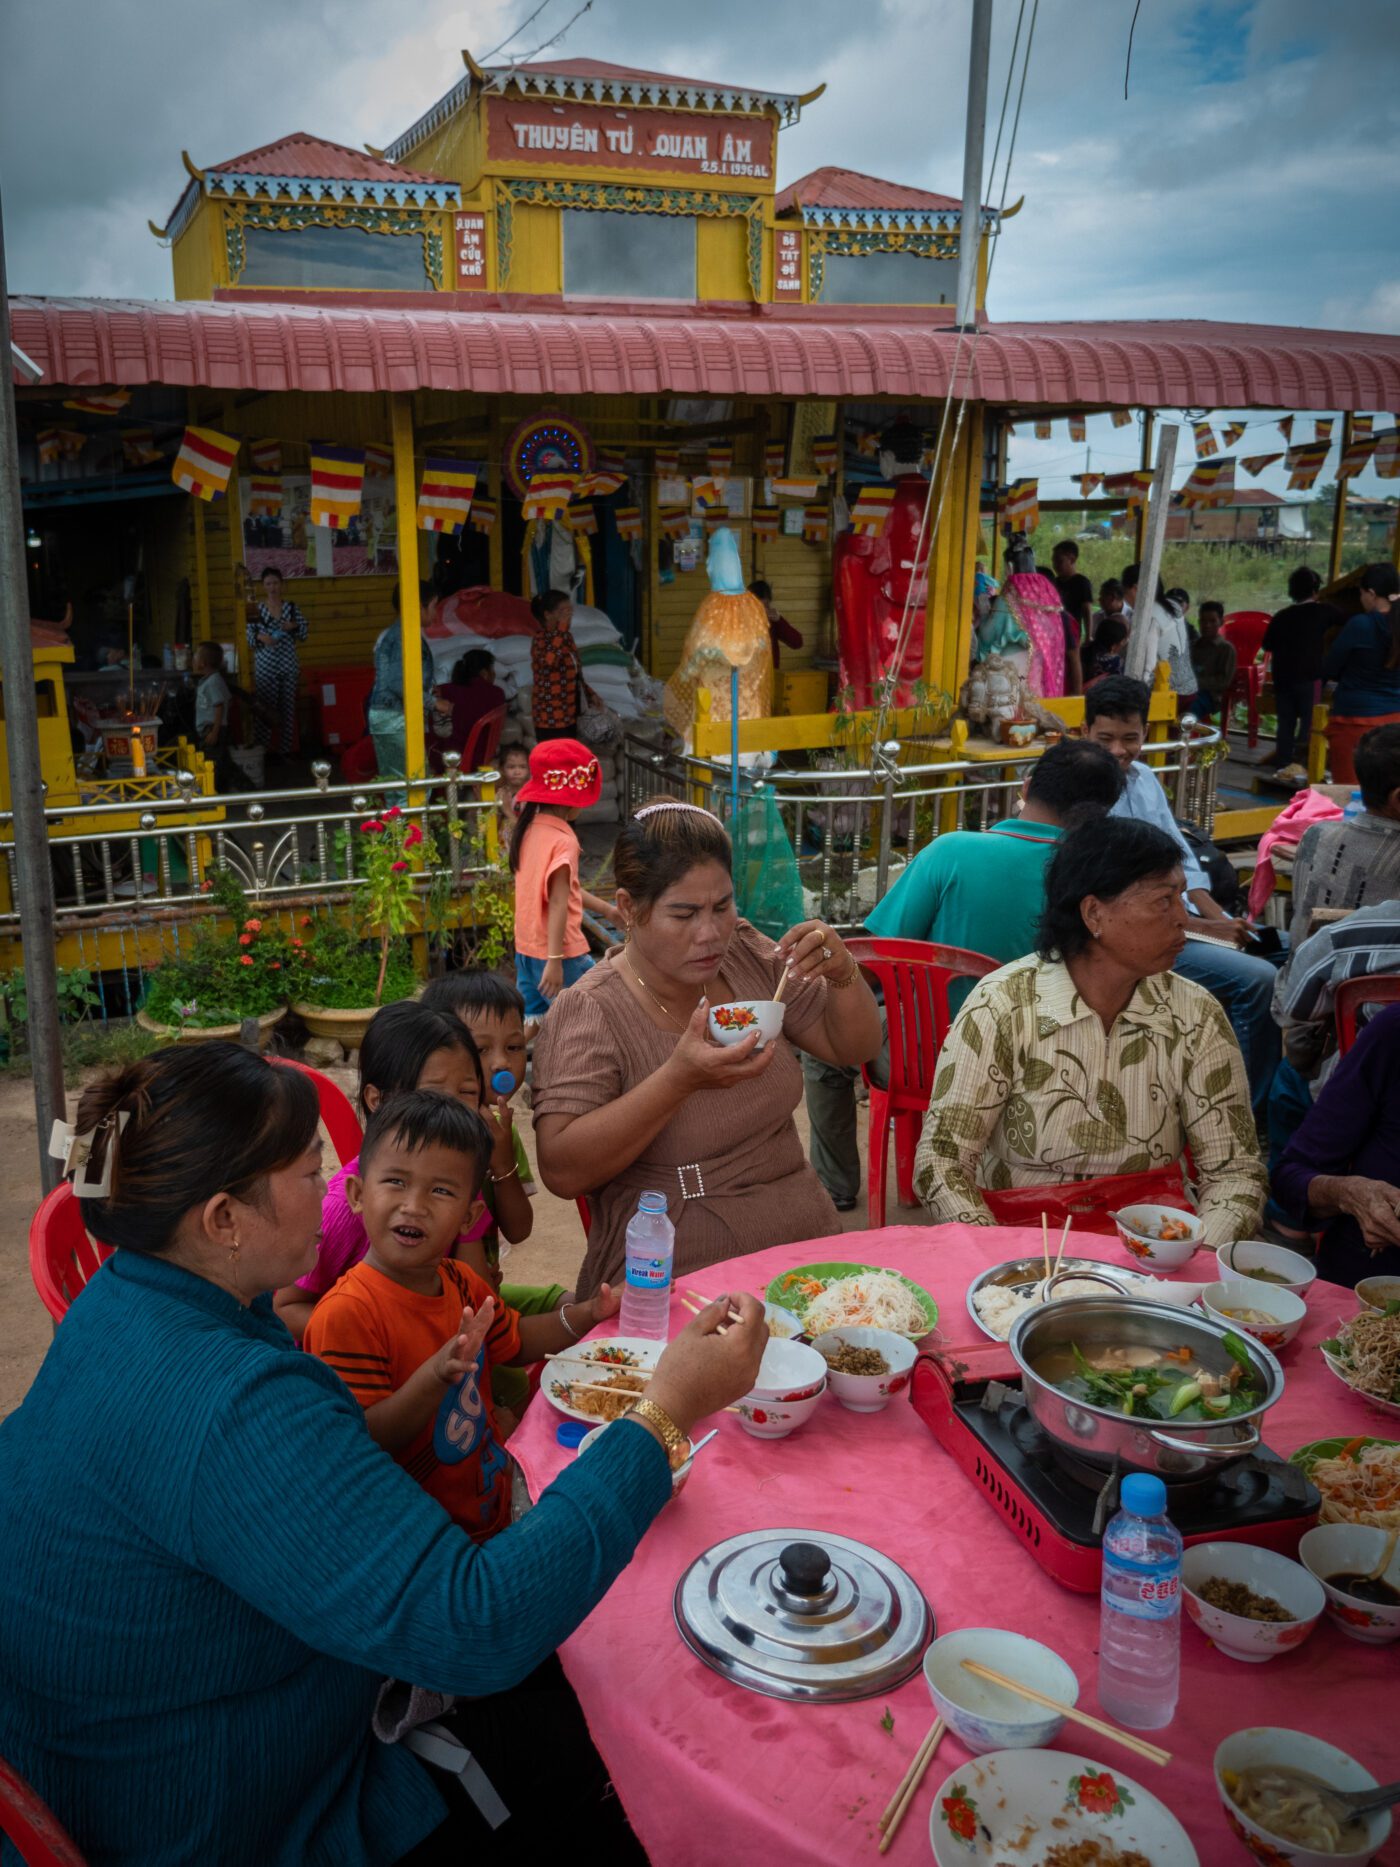 Festivities at Chhnok Trou village’s celebration of the Ghost Festival on August 30 outside the community pagoda.